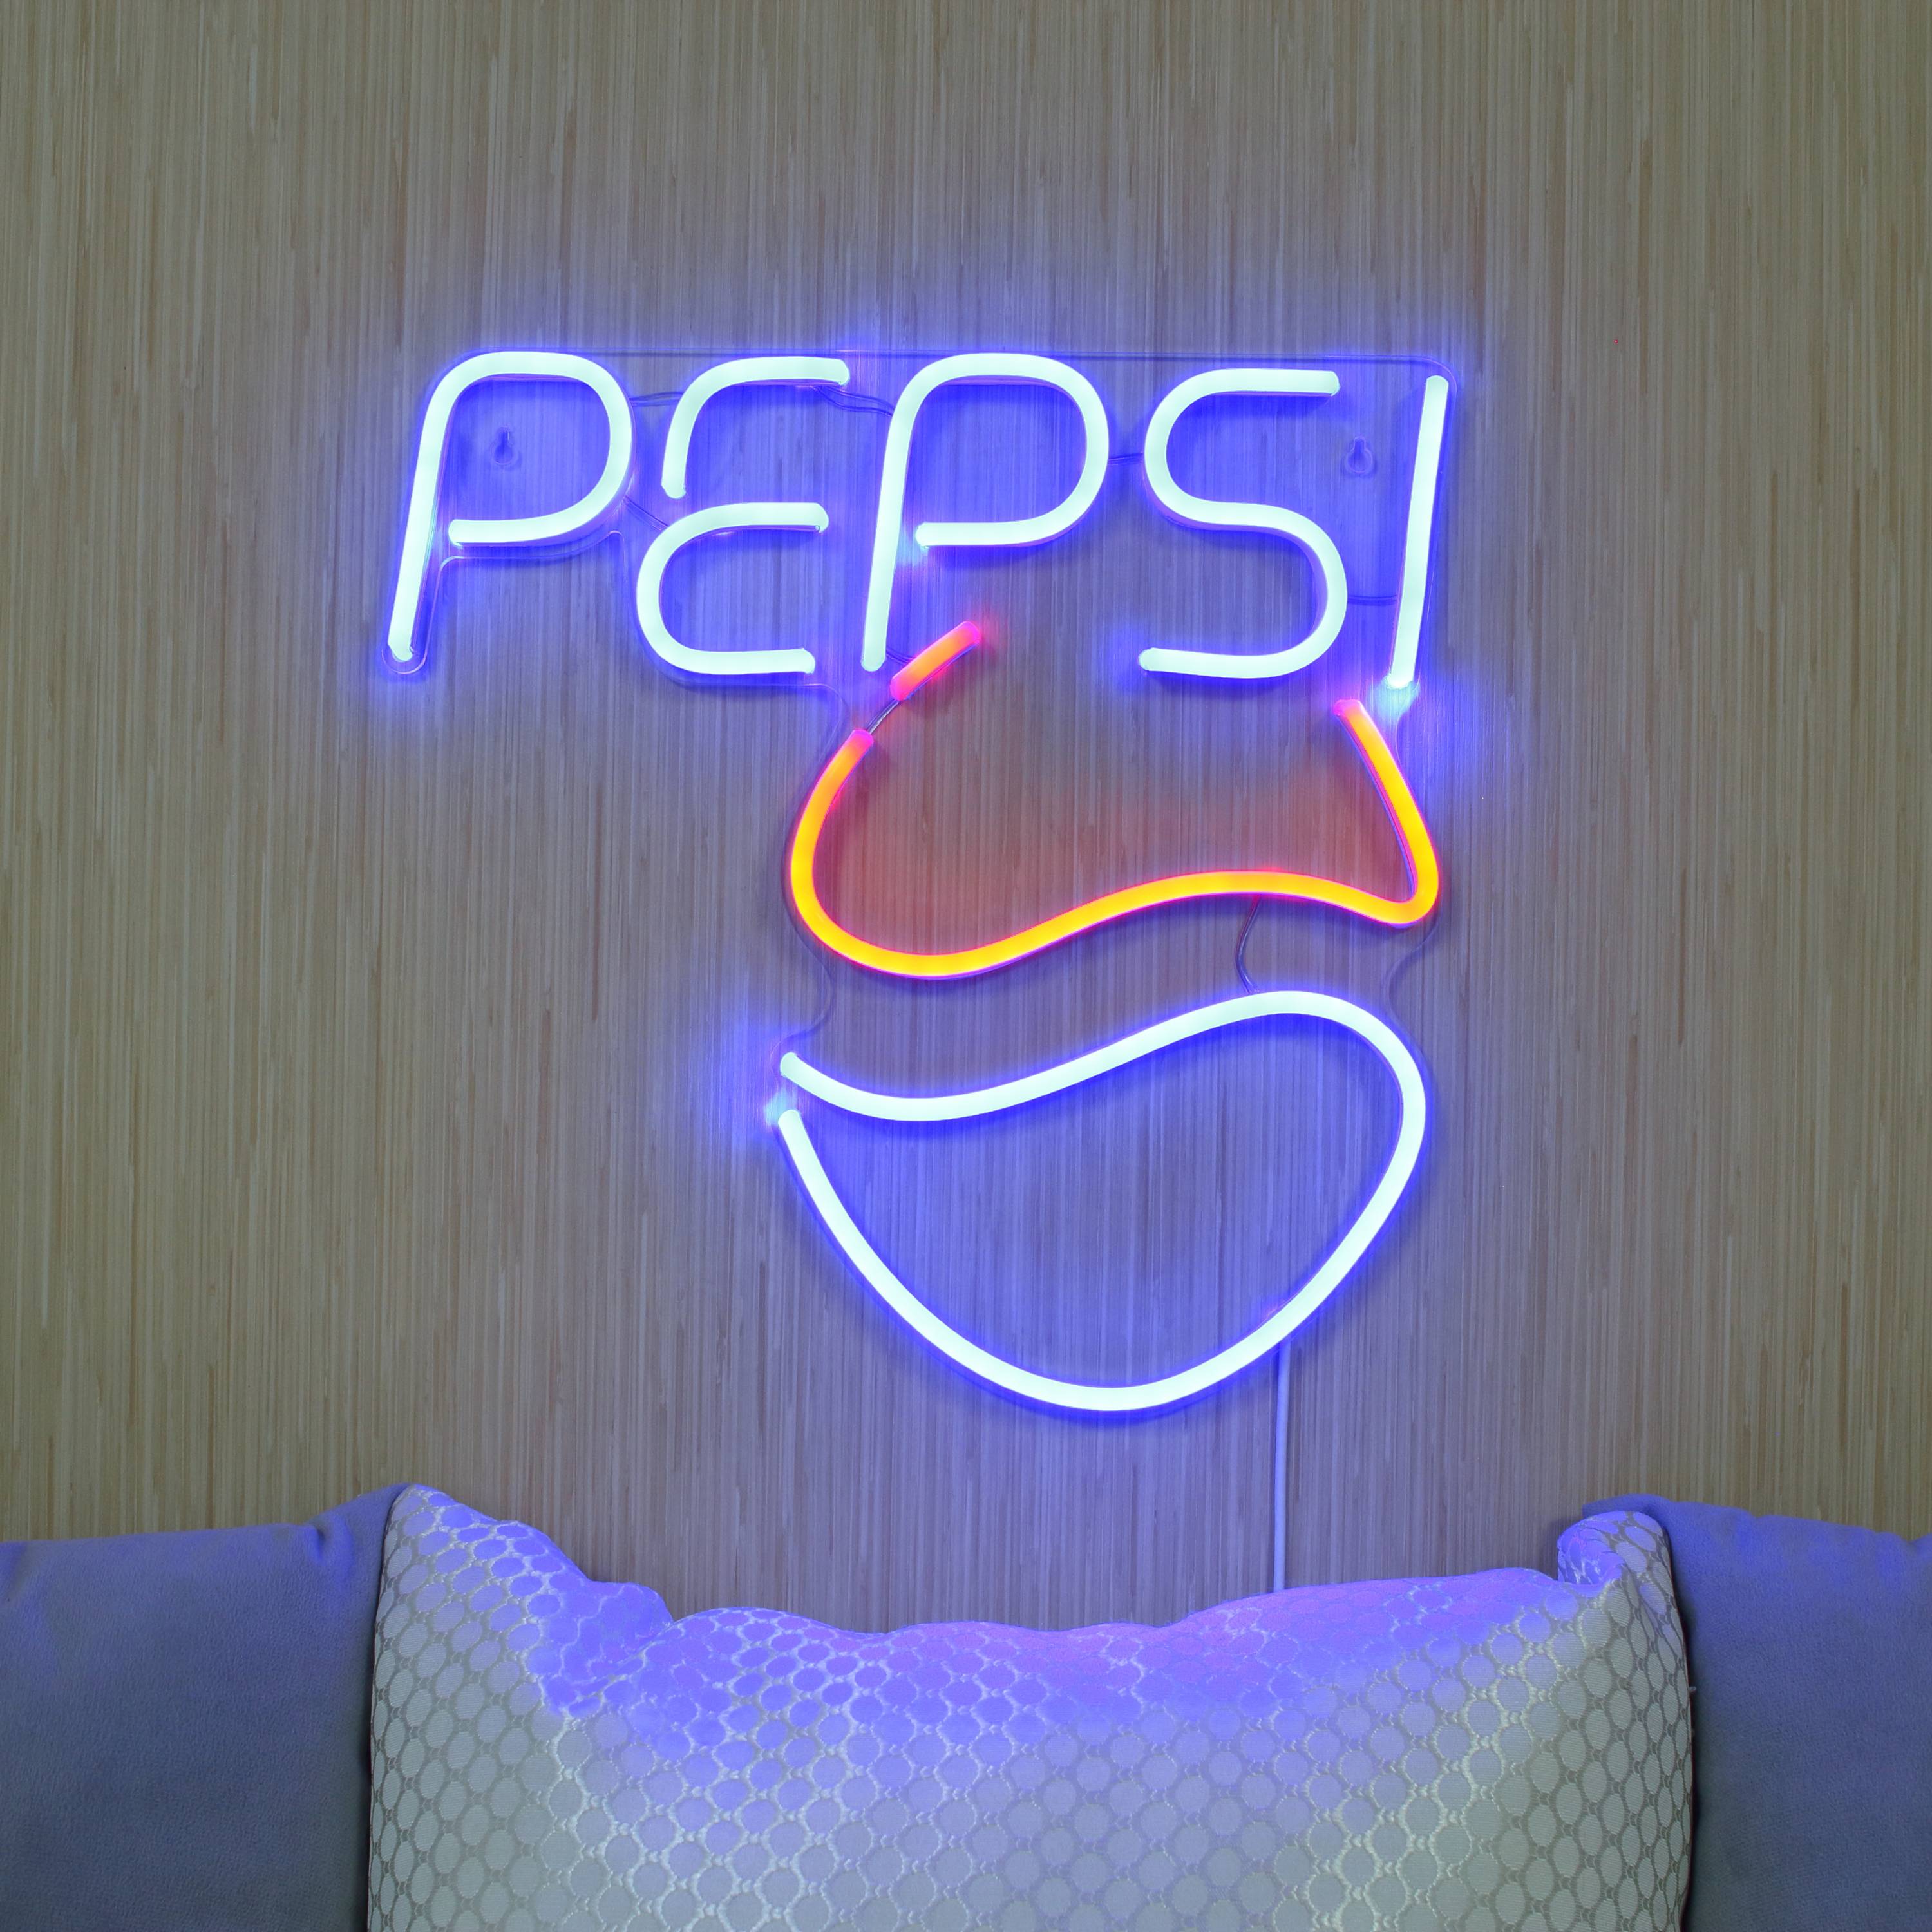 Pepsi Large Flex Neon LED Sign